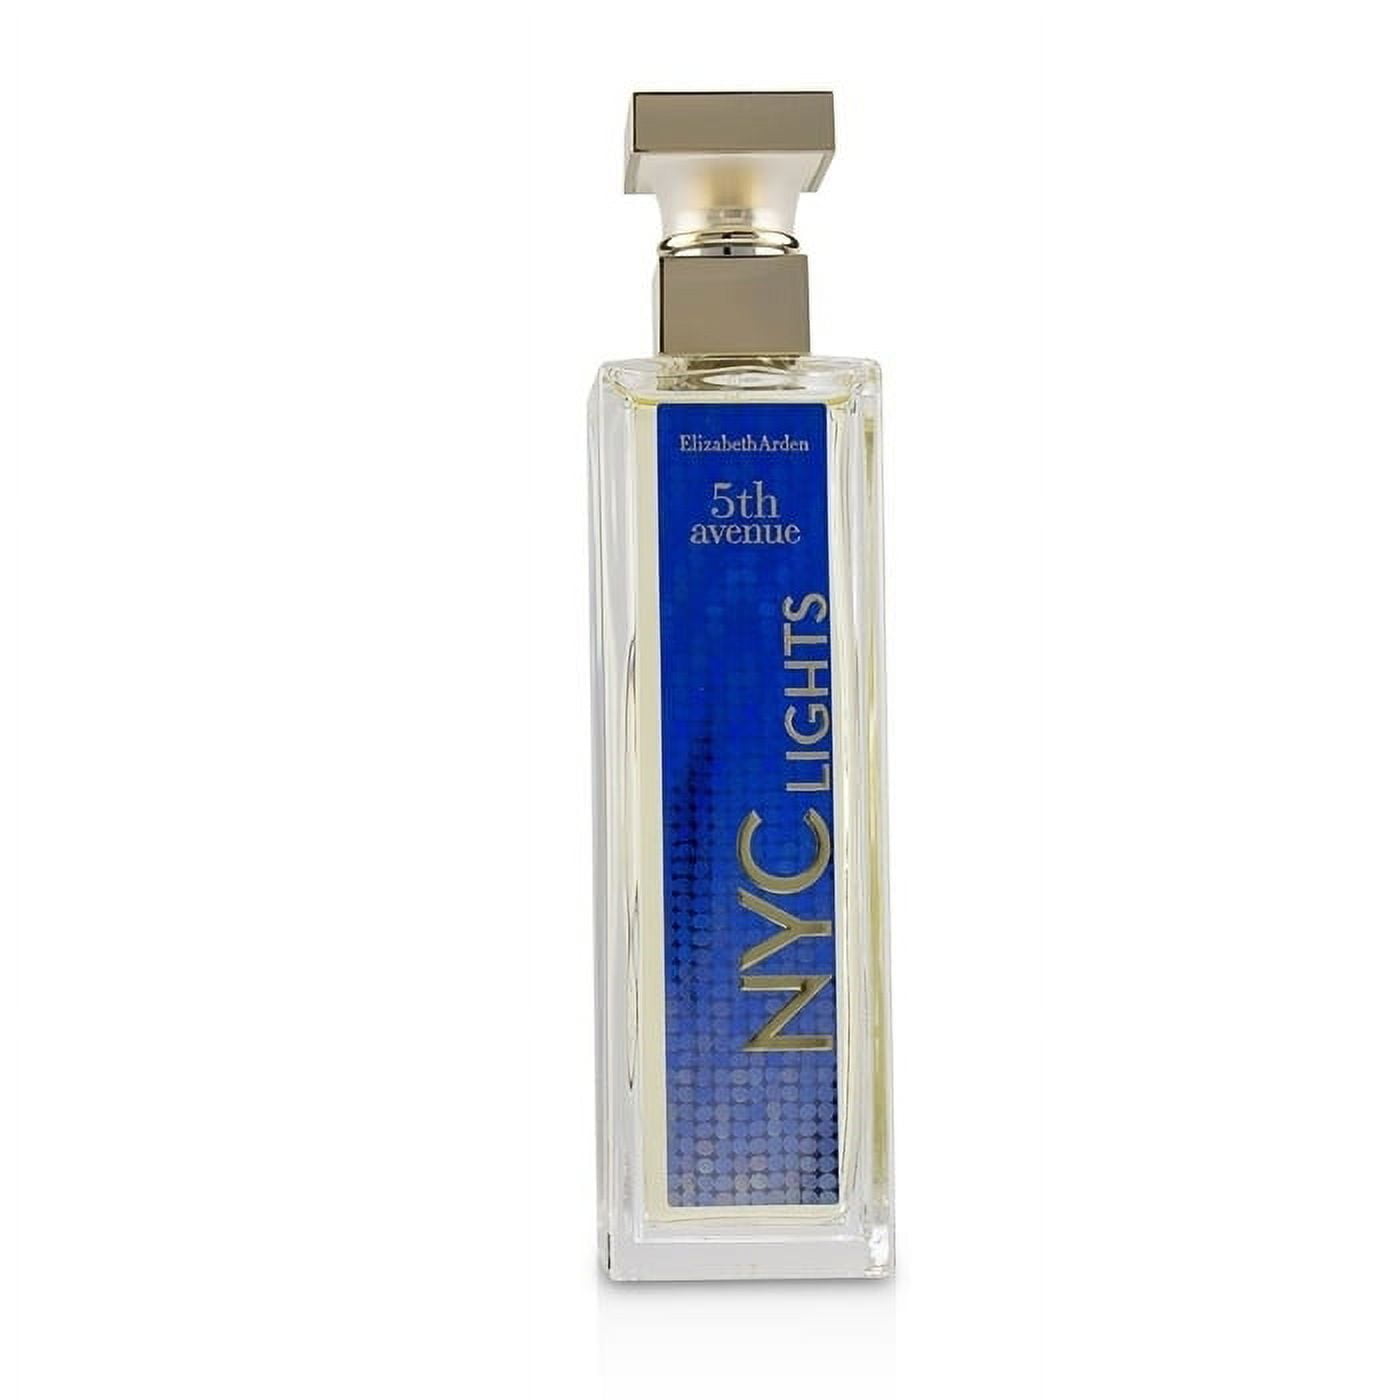 Elizabeth Arden Avenue Parfum De 75ml/2.5oz Lights Spray Eau NYC 5th